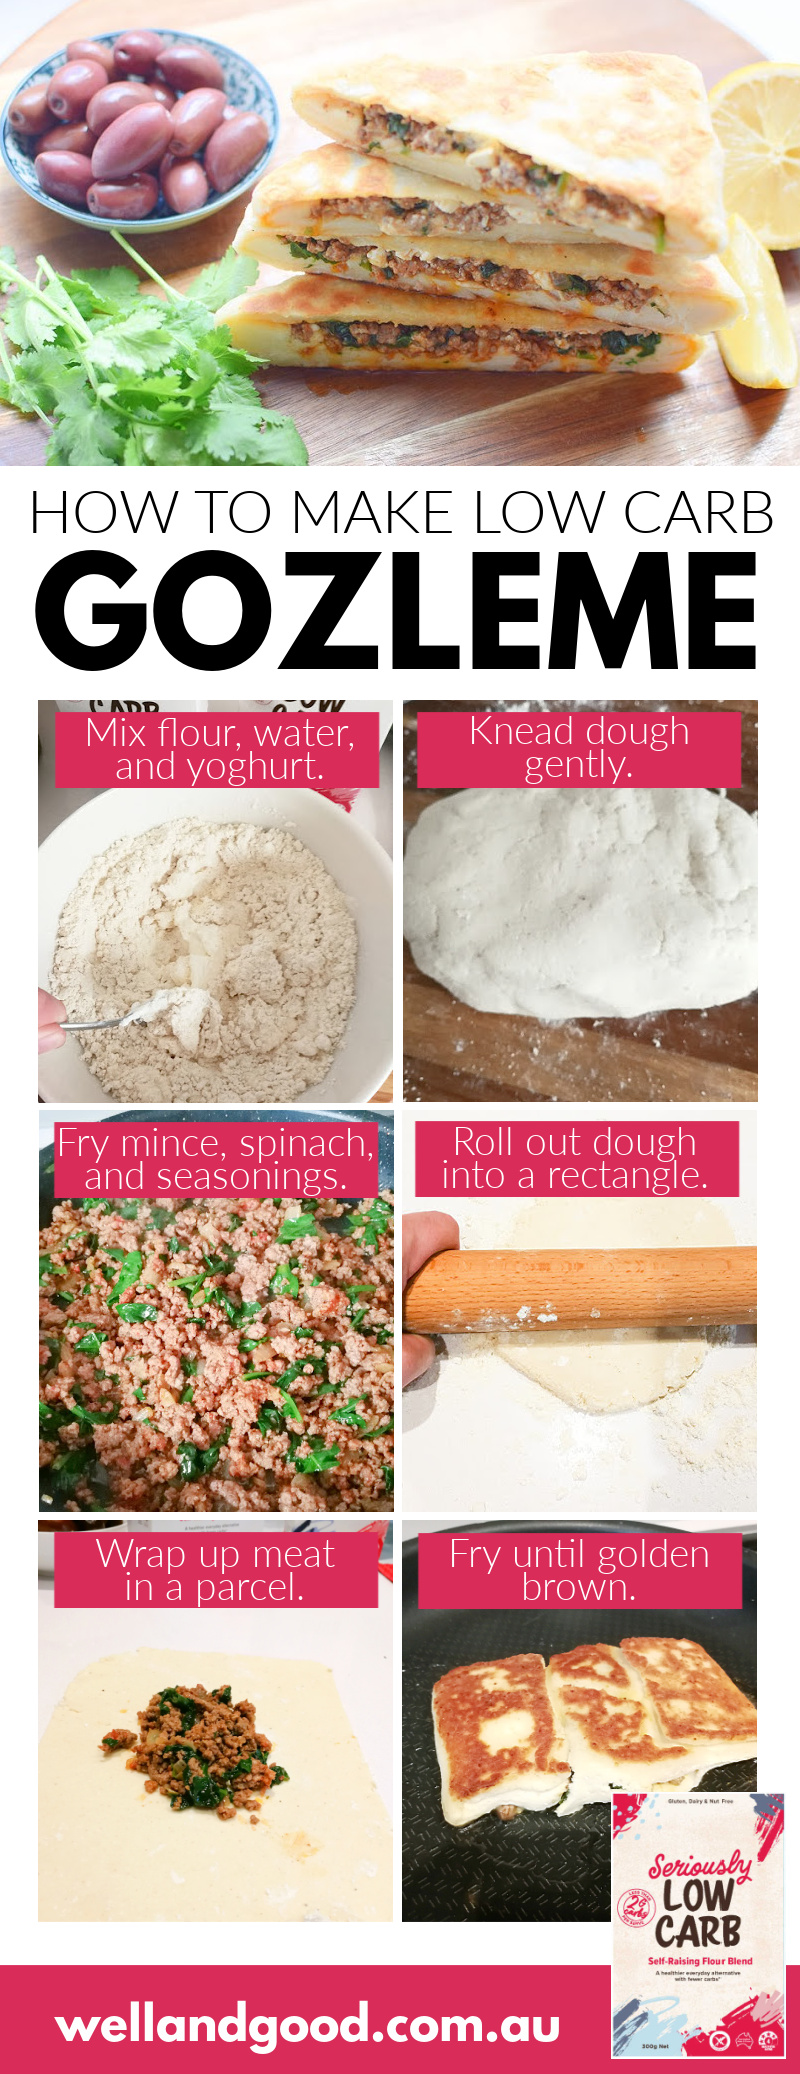 Low Carb Gozleme Recipe Steps